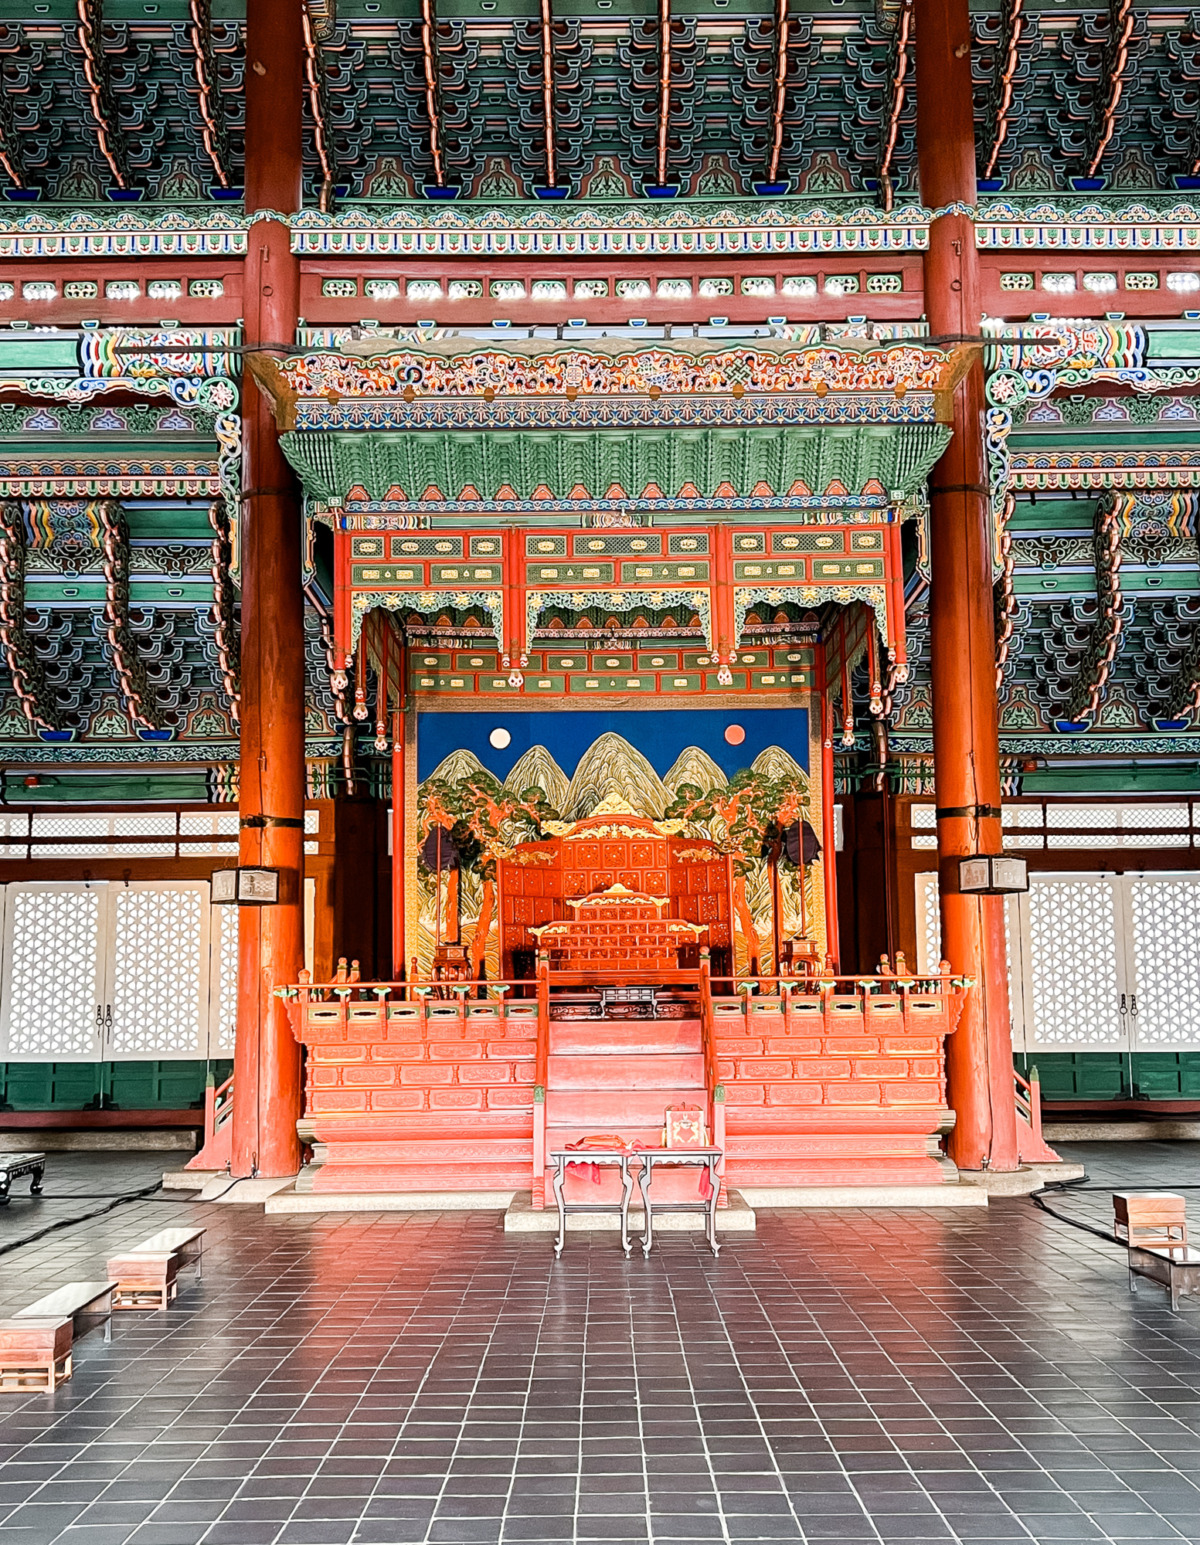 Kyung bok gung palace